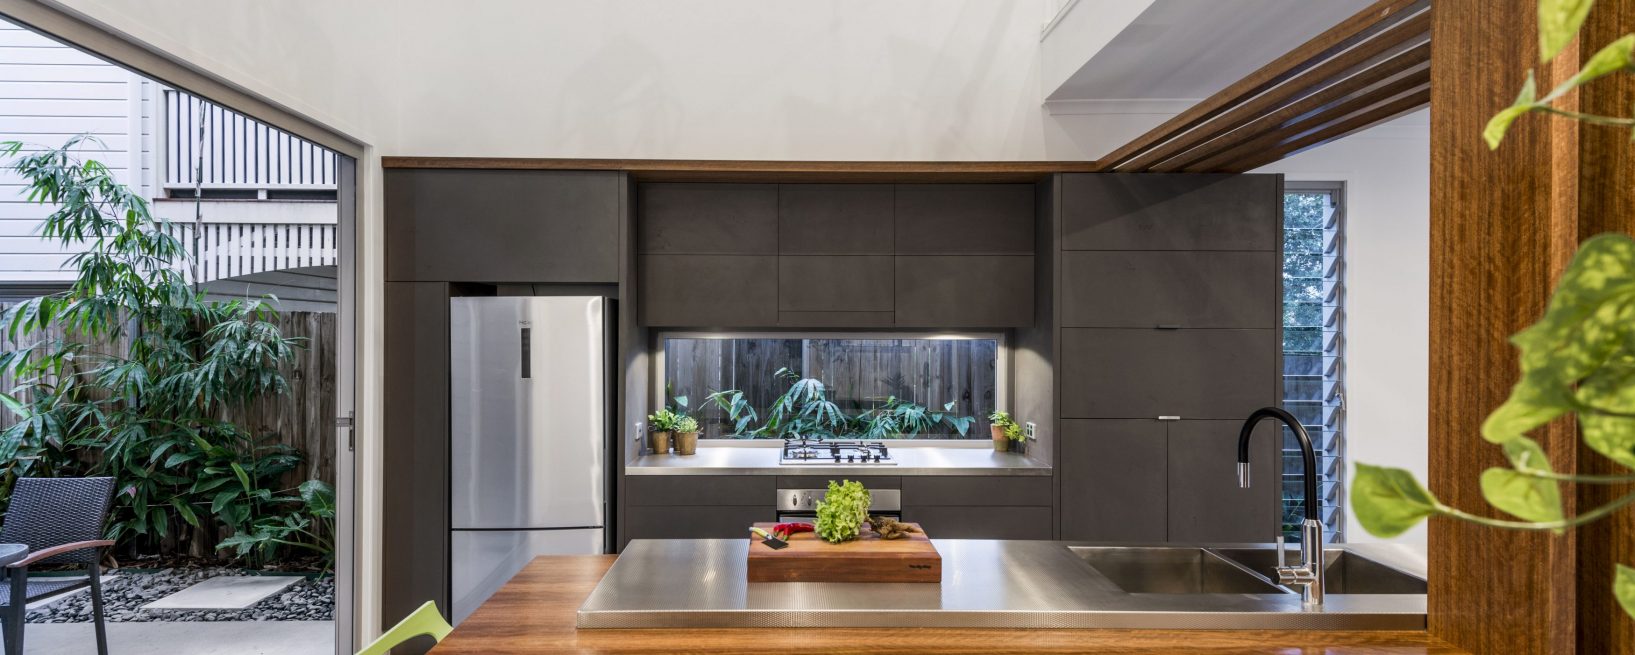 Brisbane Kitchen Design | Kitchen Renovations by Sublime Architectural